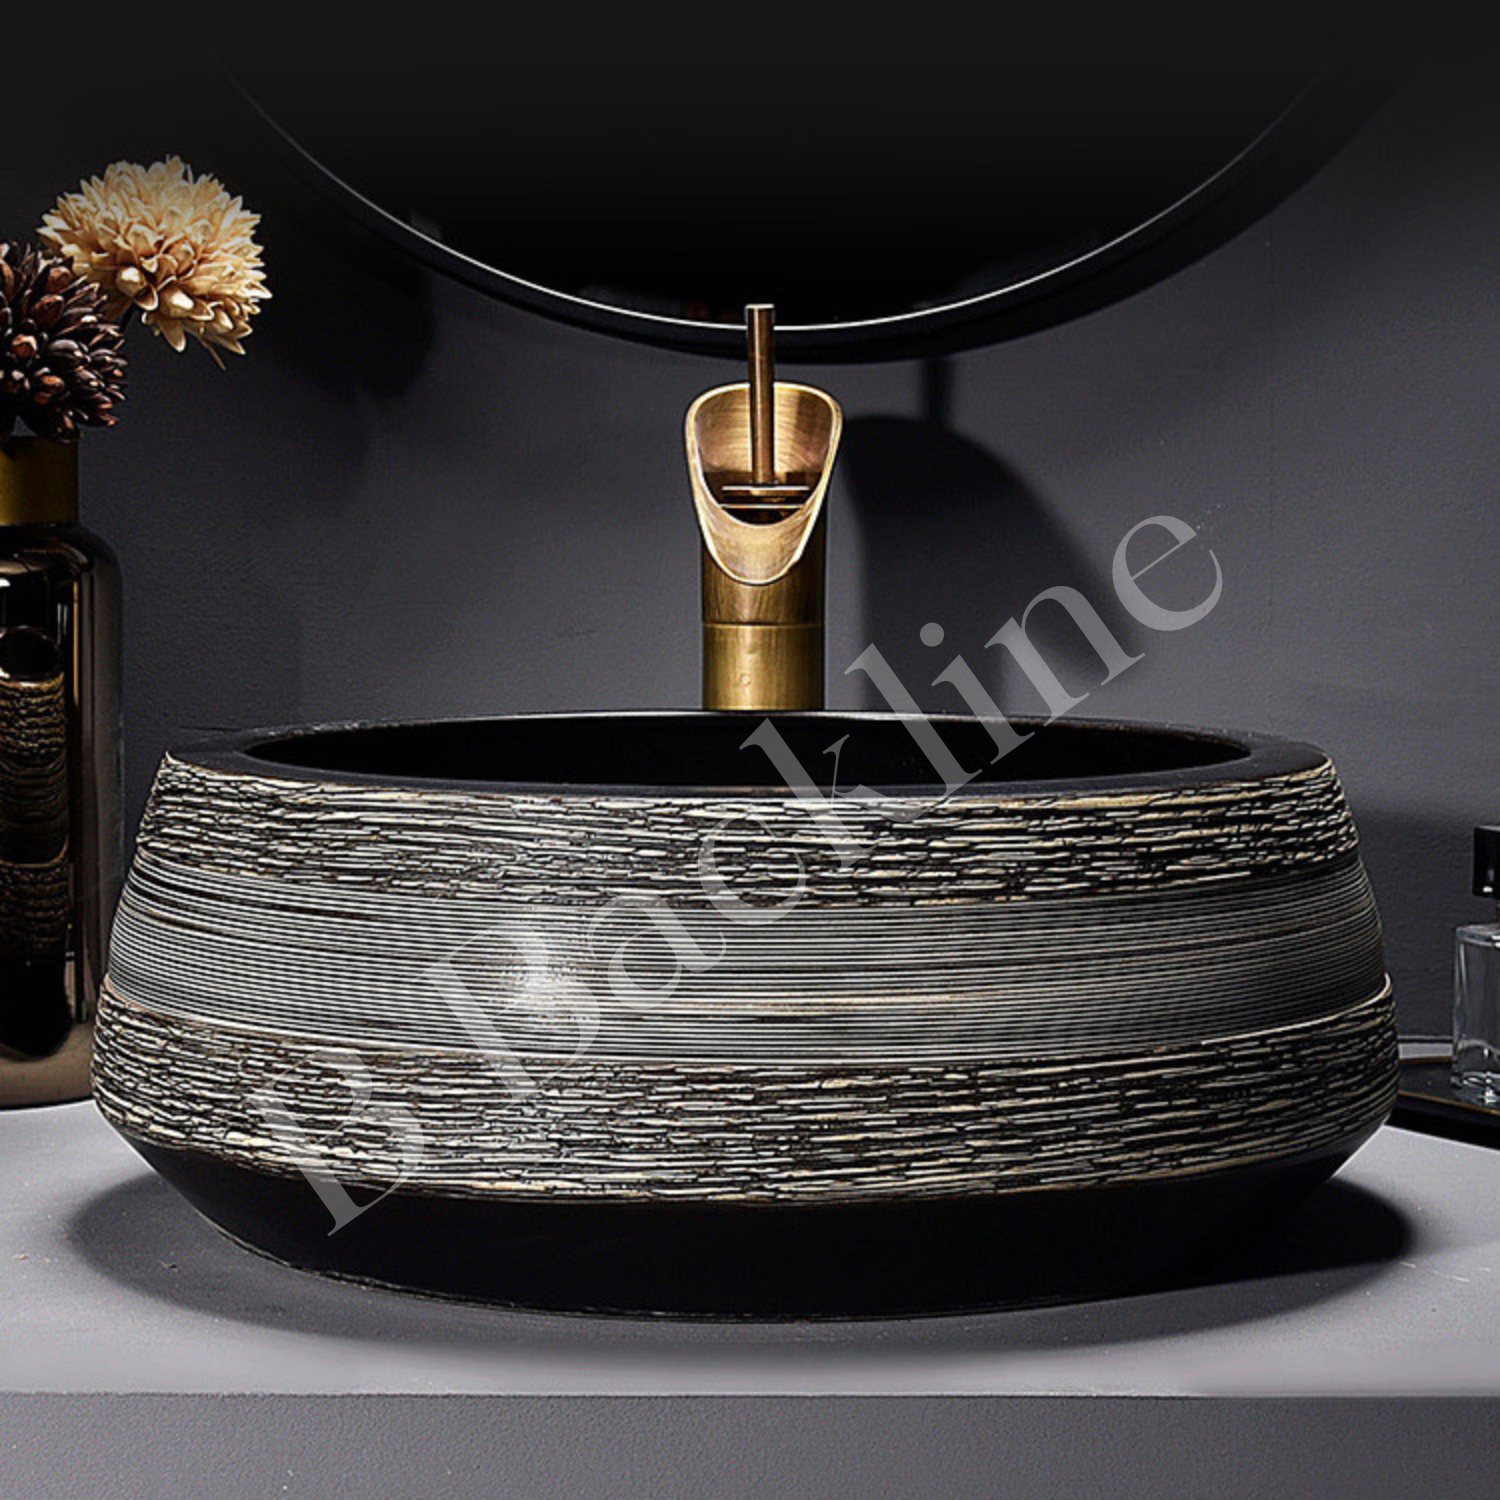 B Backline Ceramic Table Top Wash Basin | Counter Top Basin For Bathroom & Livingroom  42 x42 CM Black Matt